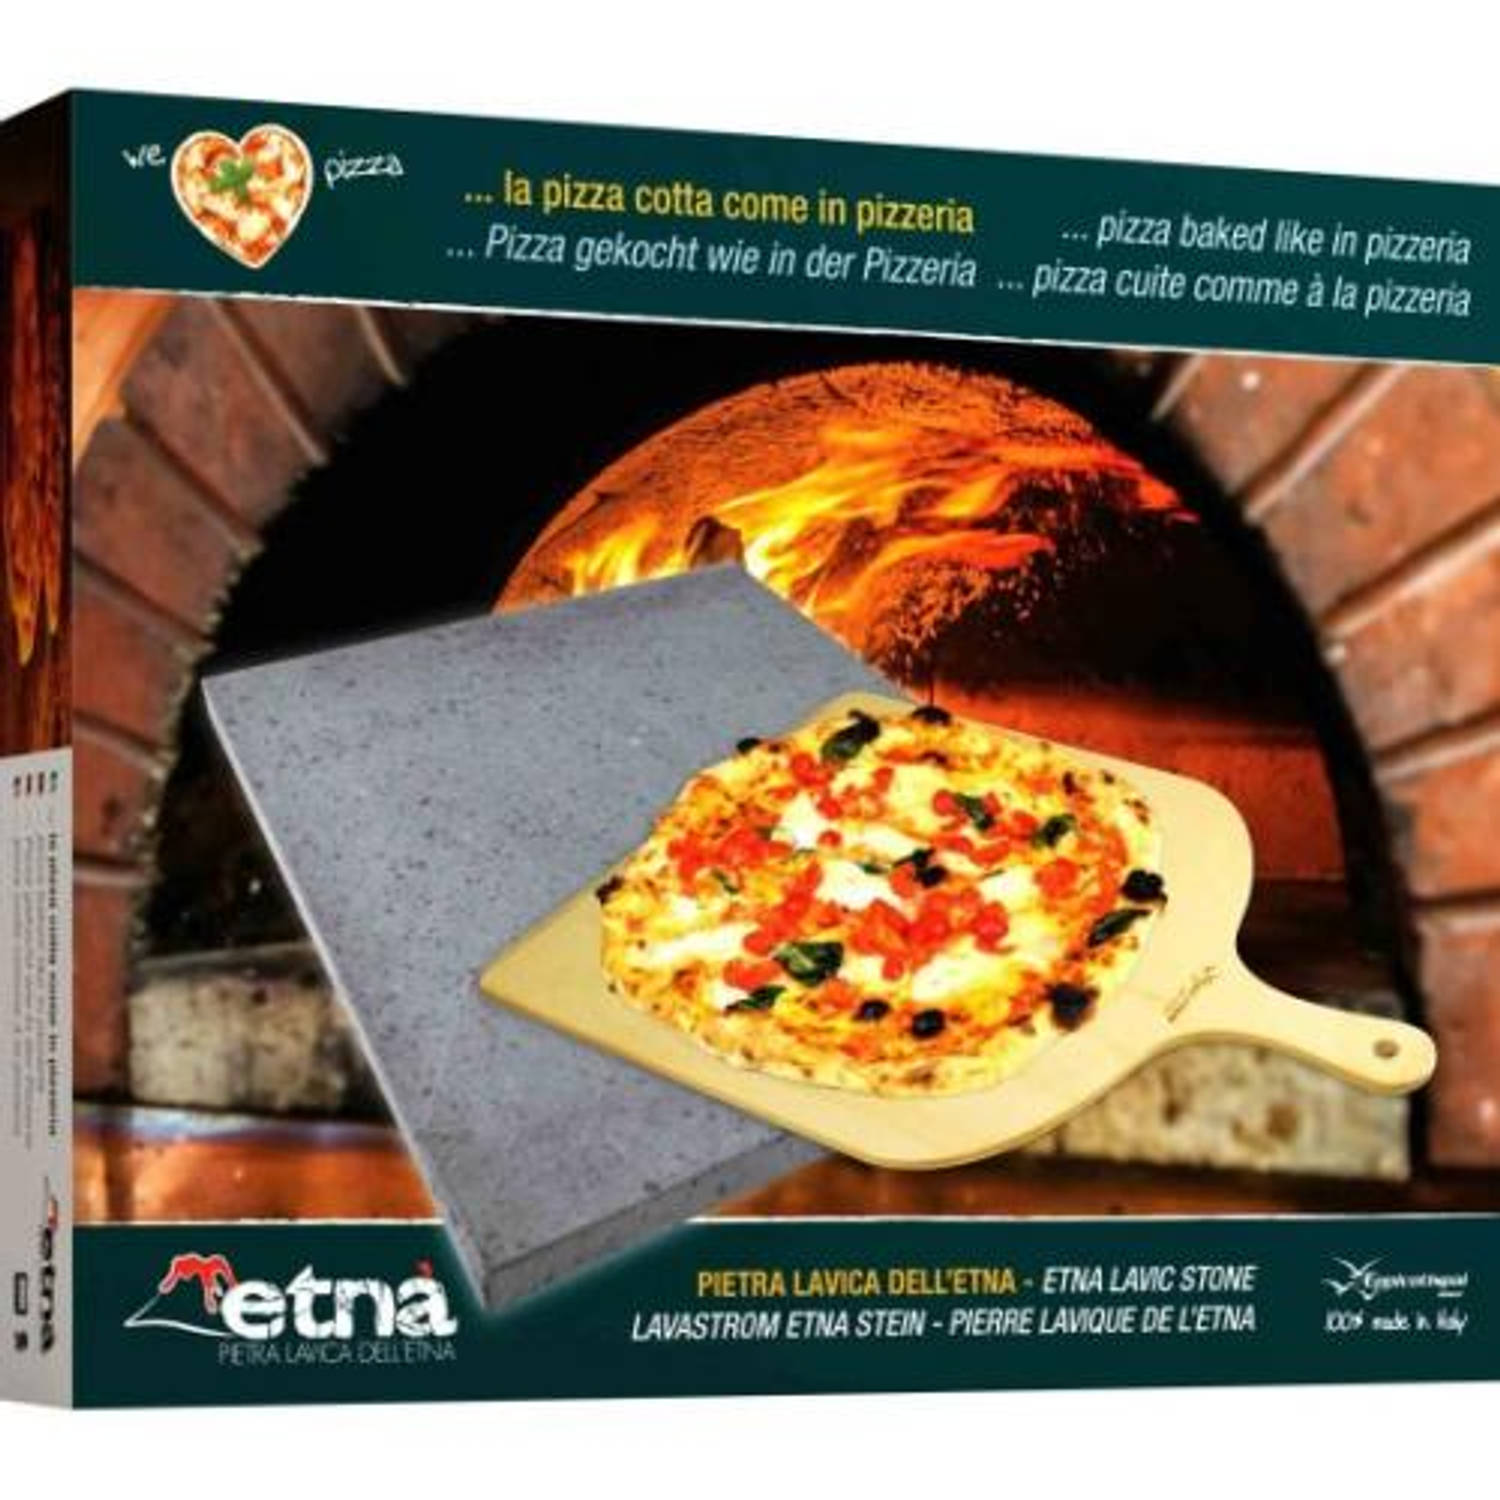 Tijdig betekenis Geniet Eppicotispai - ETNA Pizza set - Eppicotispai | Blokker